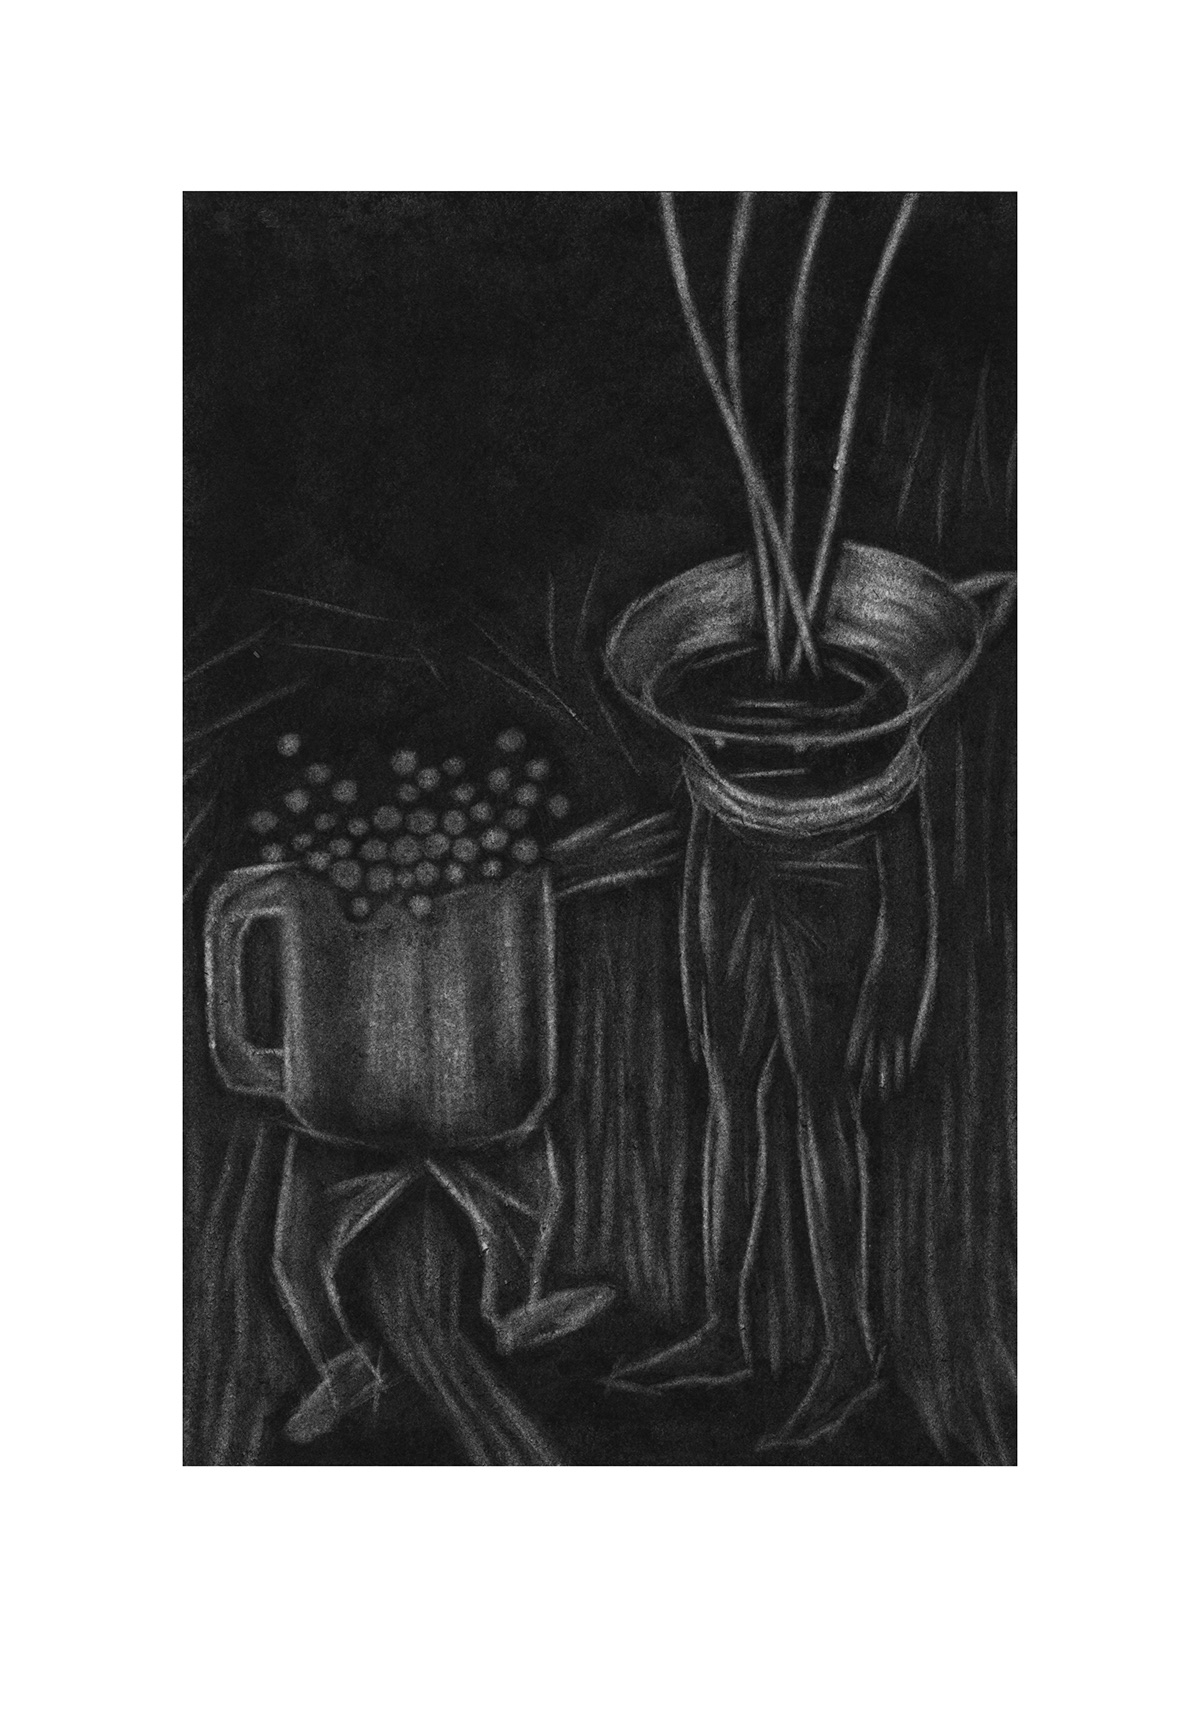 tea Coffee comicstrip ILLUSTRATION  charcoal on paper composition Behance design Design Inspiration graphic design 